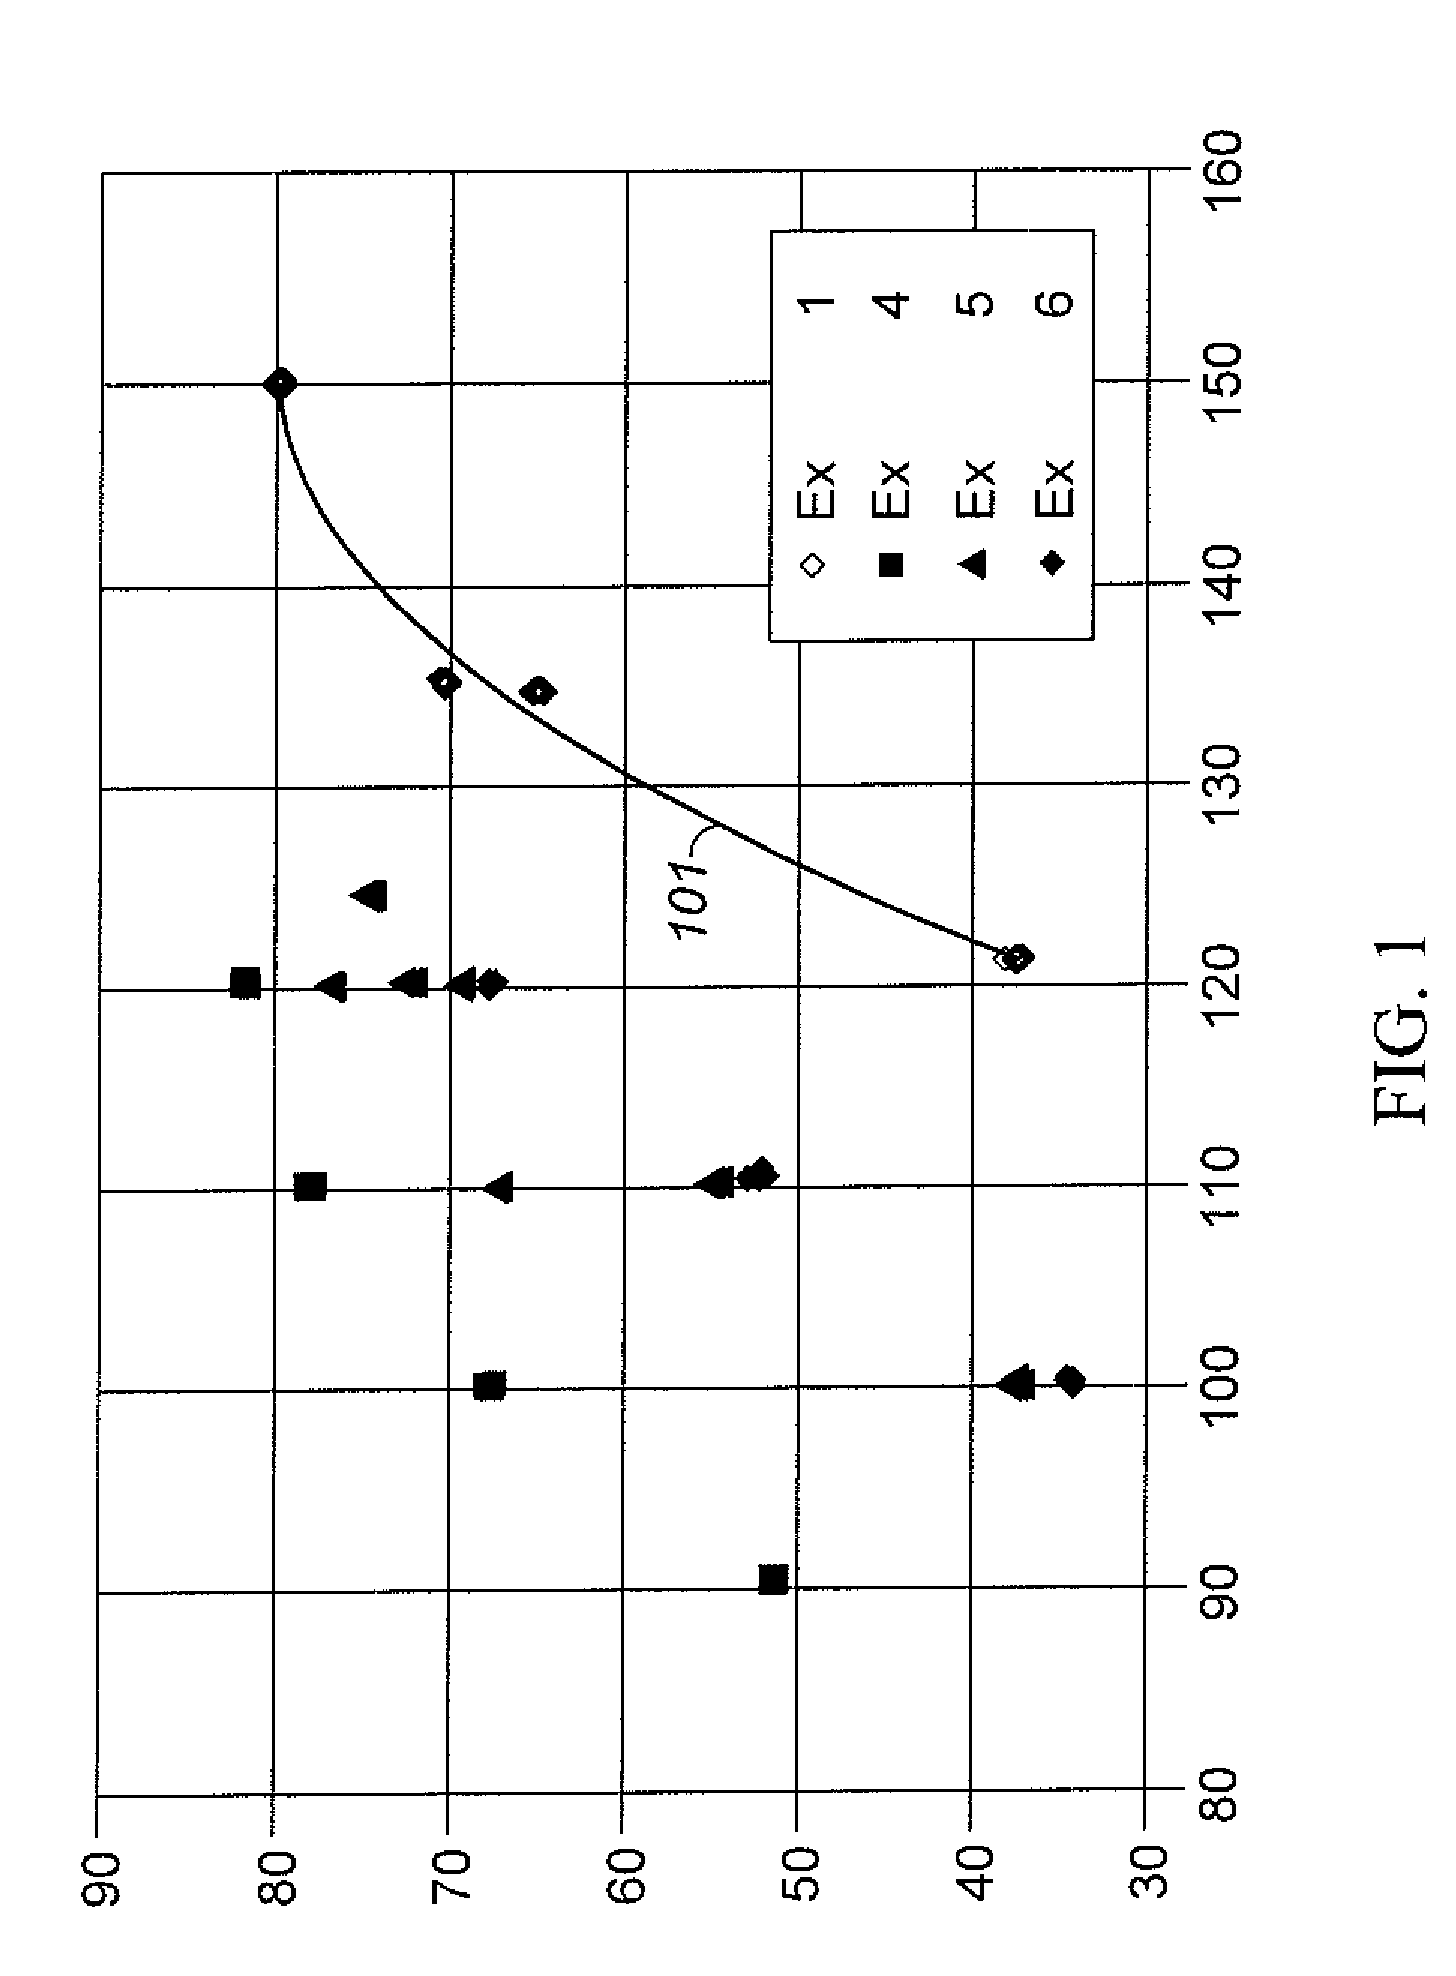 Aromatic transalkylation using a LZ-210 zeolite